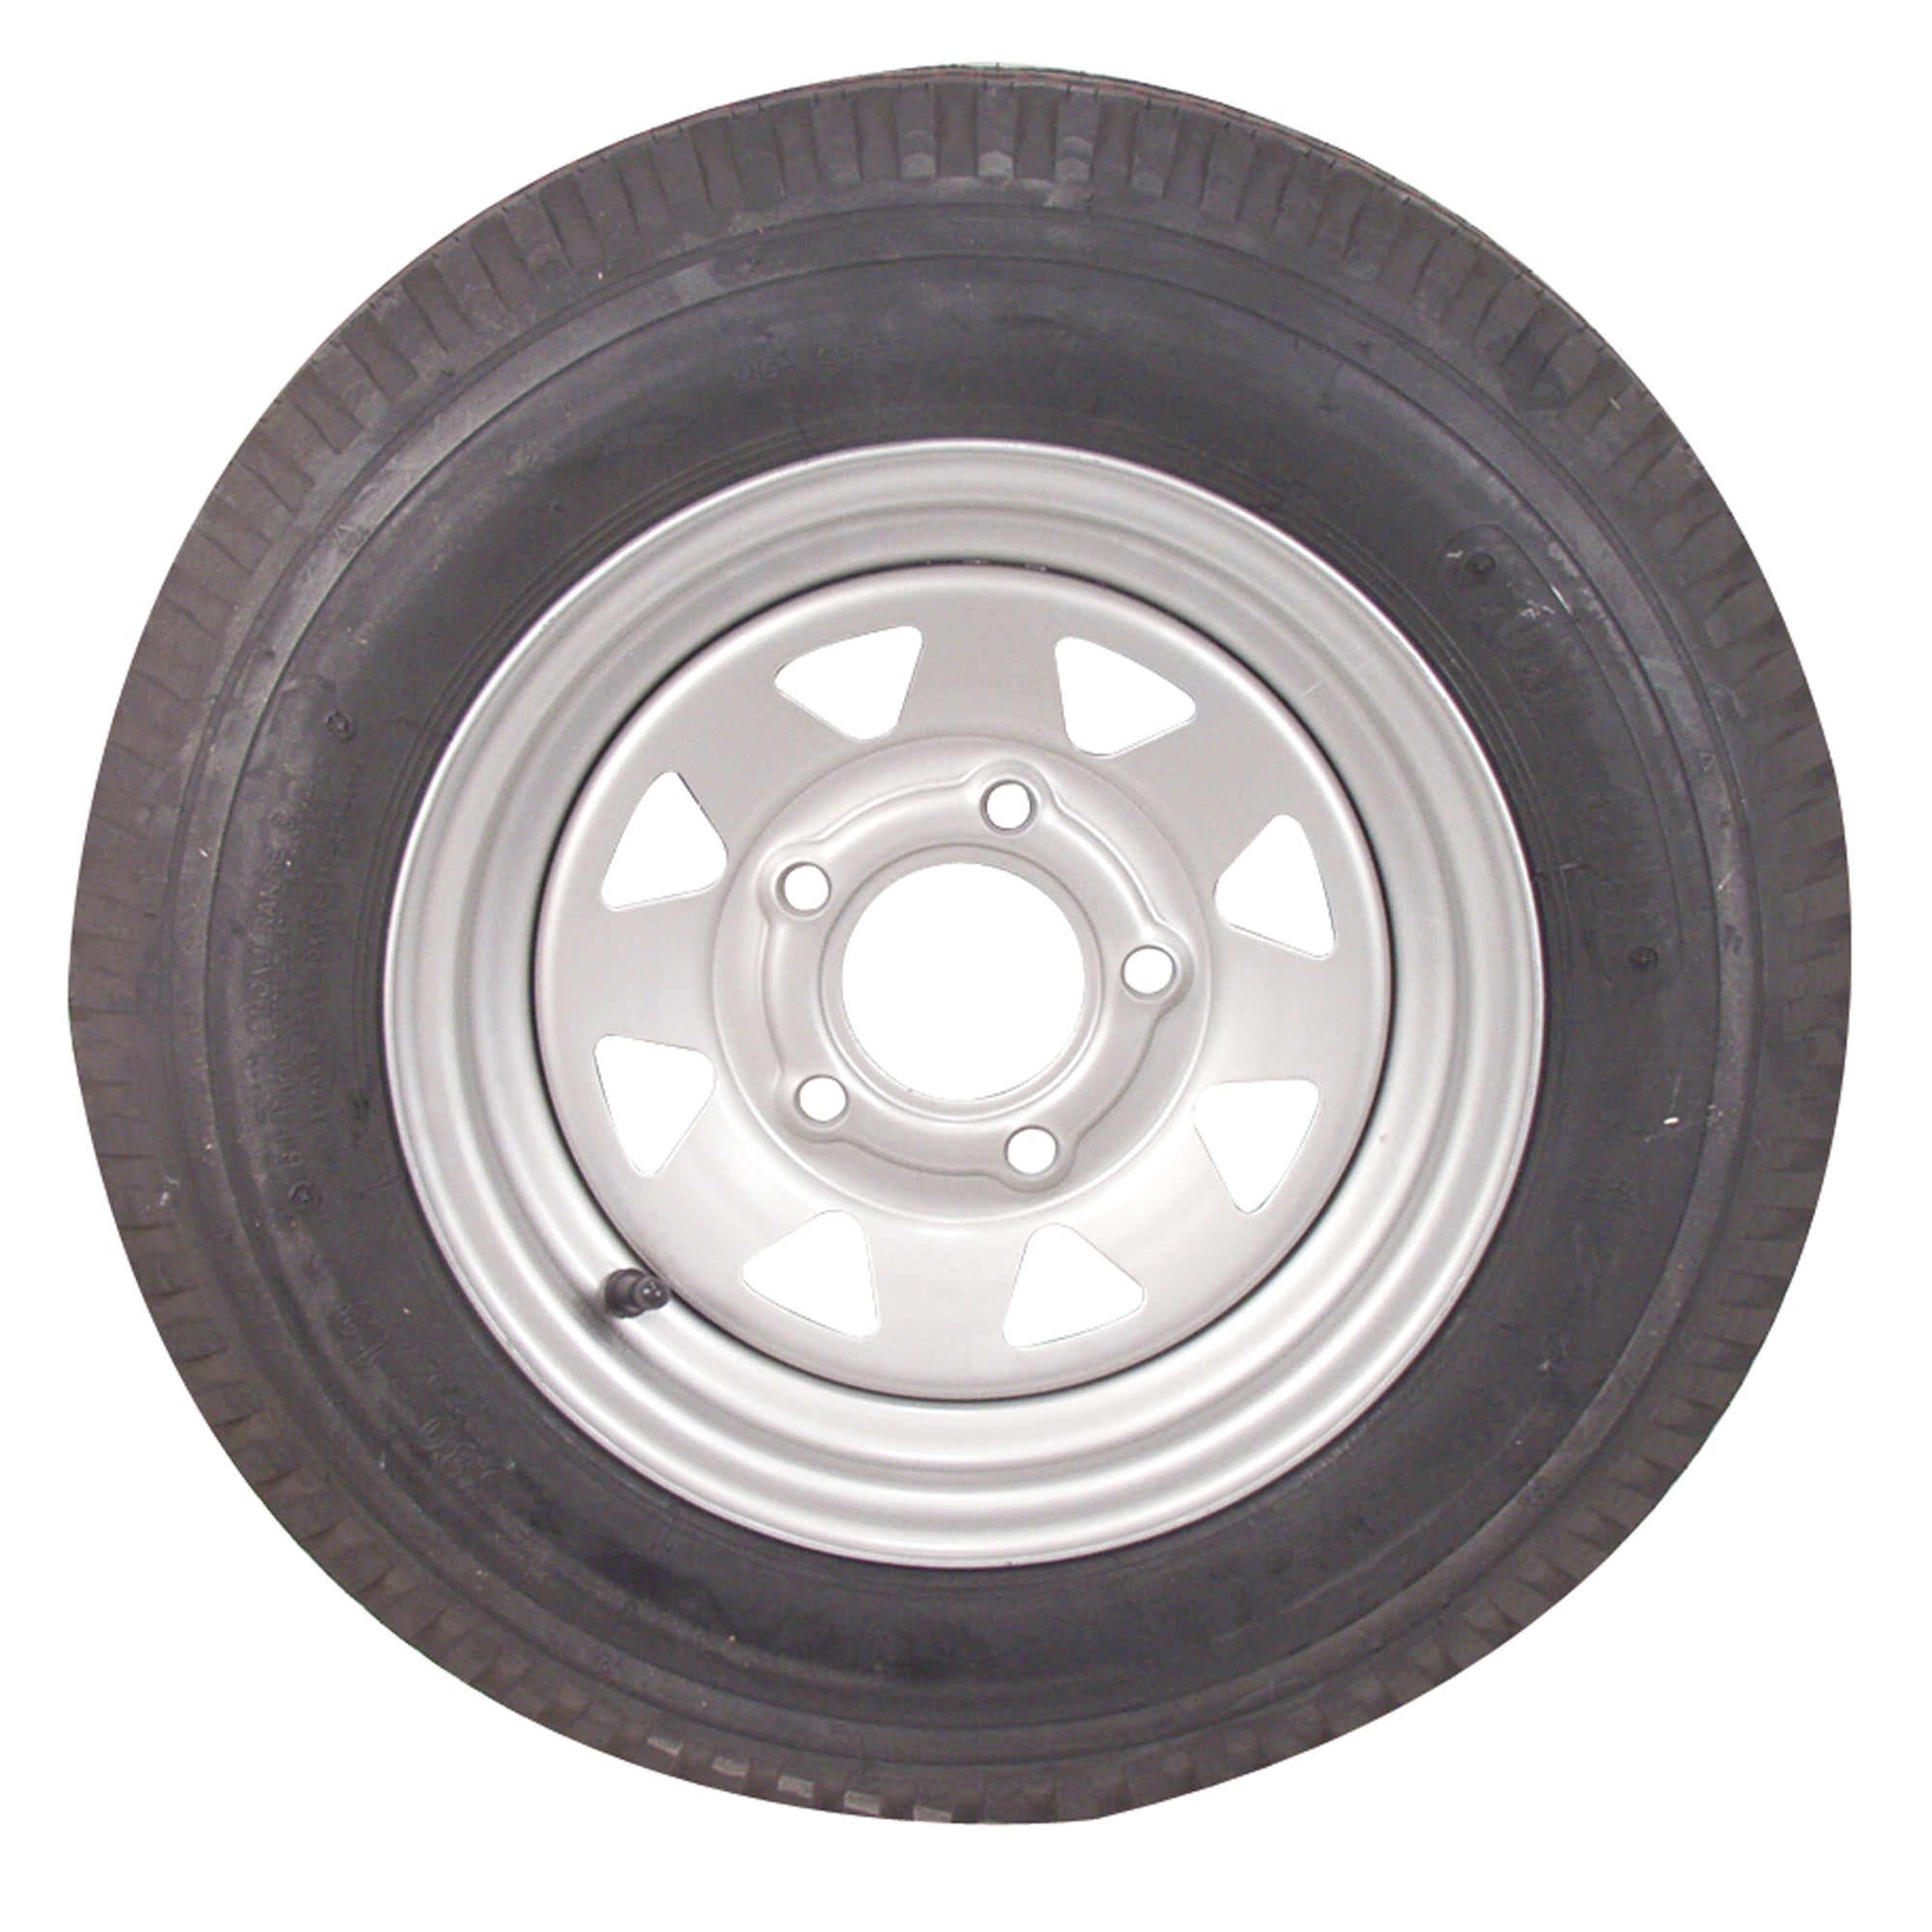 Americana Tire and Wheel 3S160 Economy Bias Tire and Wheel ST175/80D13 C/5-Hole - Galvanized Spoke Rim